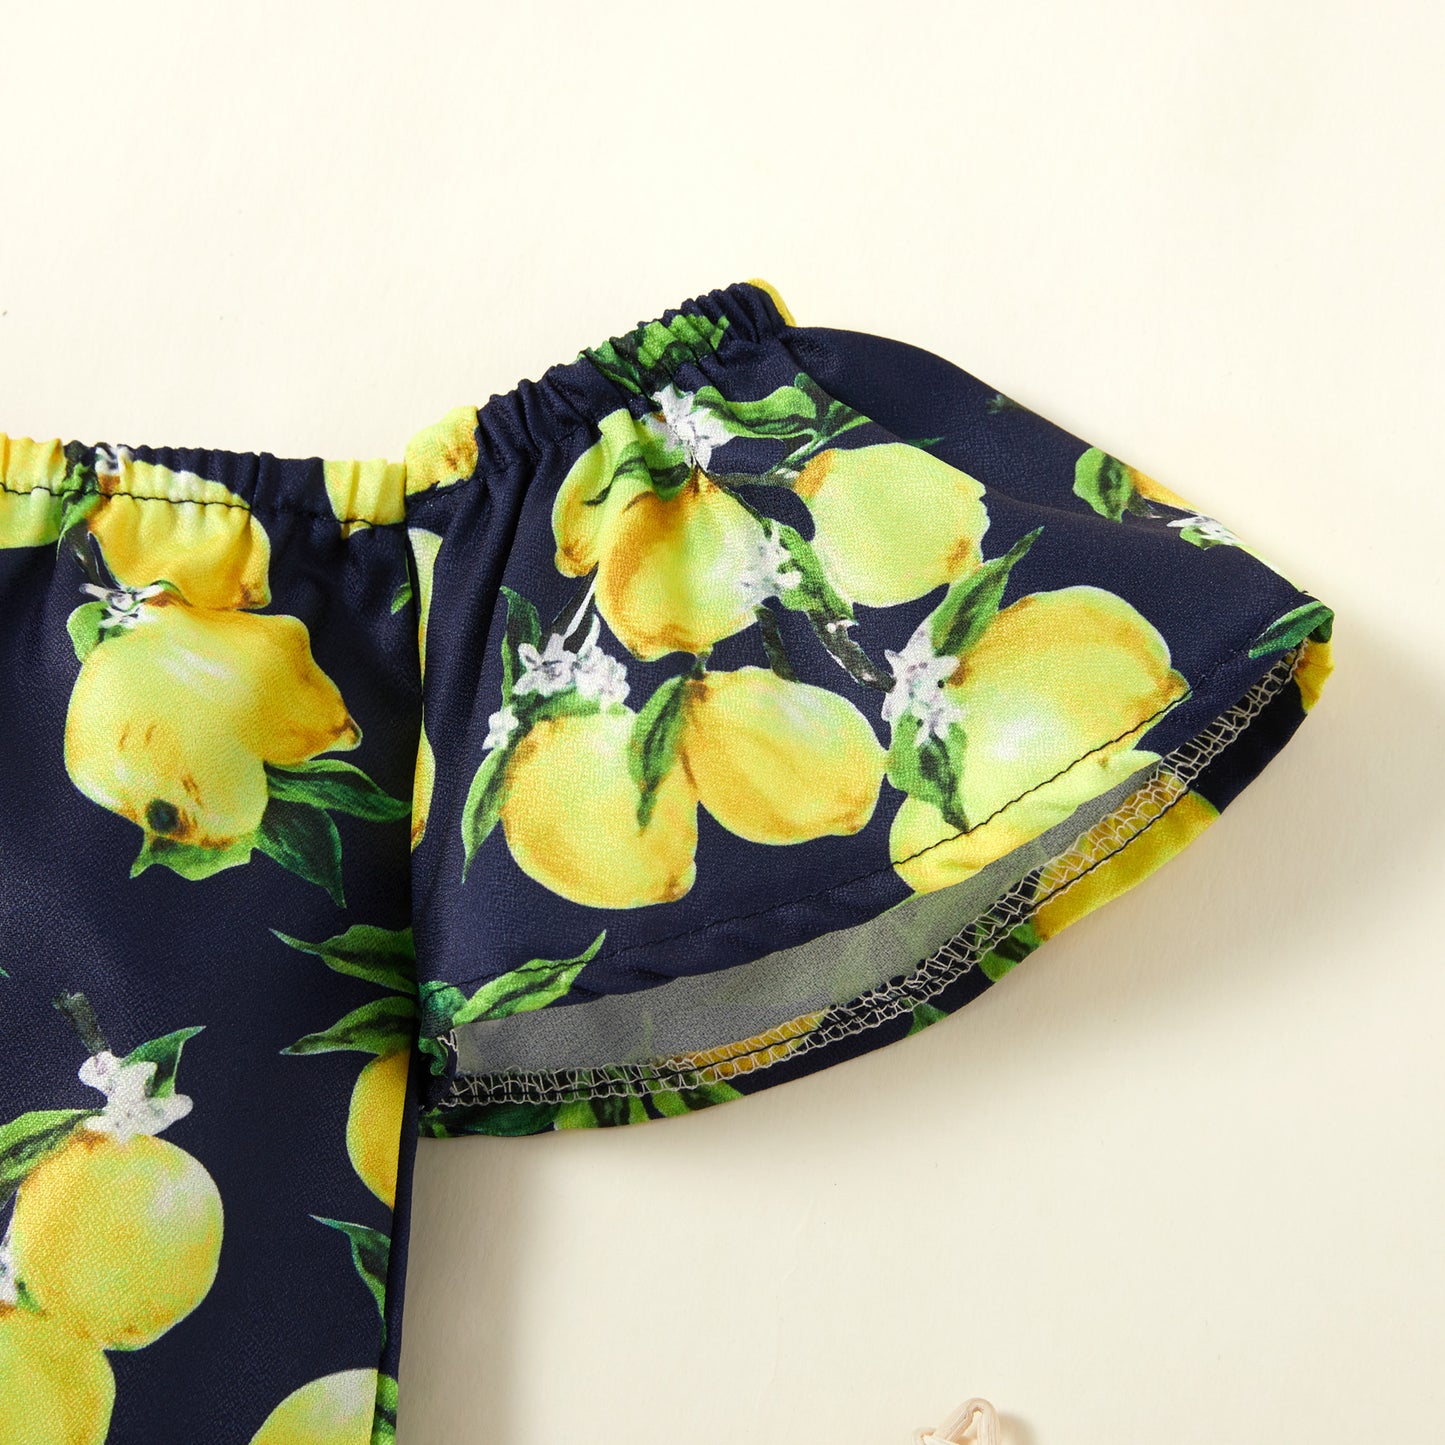 Infant/Baby Lemon Print Square Neck Bodysuit